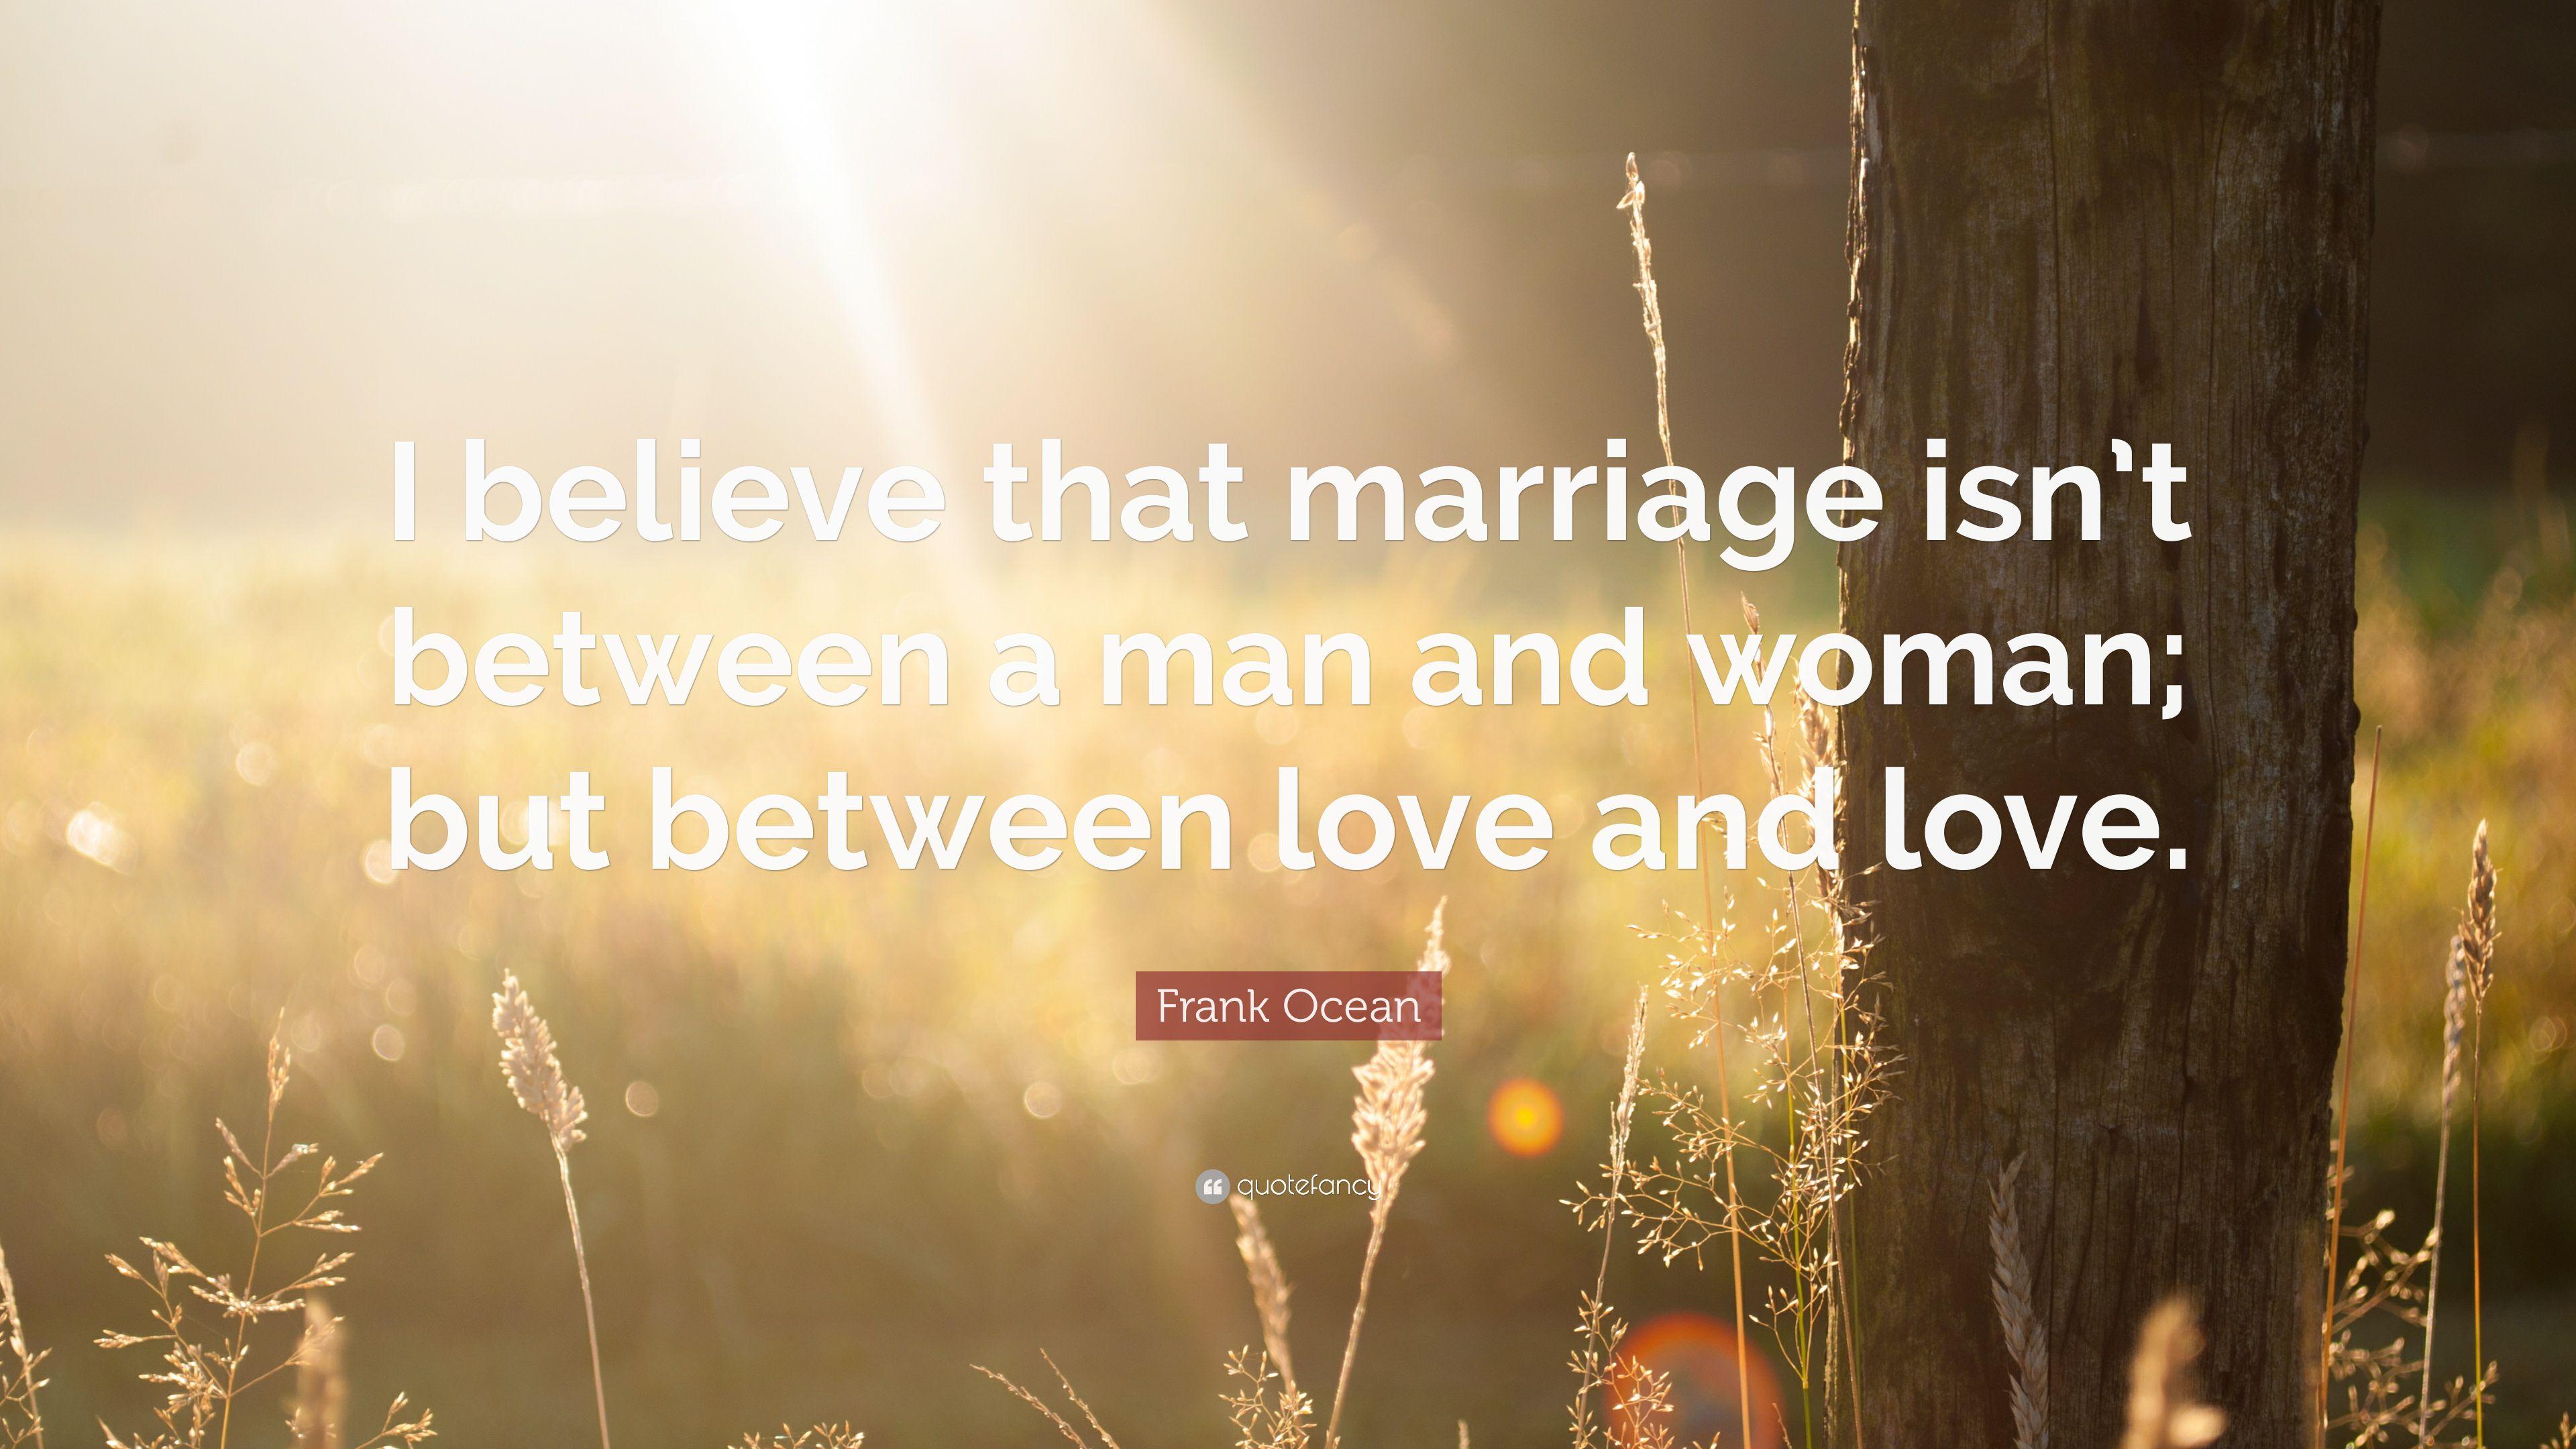 Frank Ocean Quote: “I believe that marriage isn't between a man